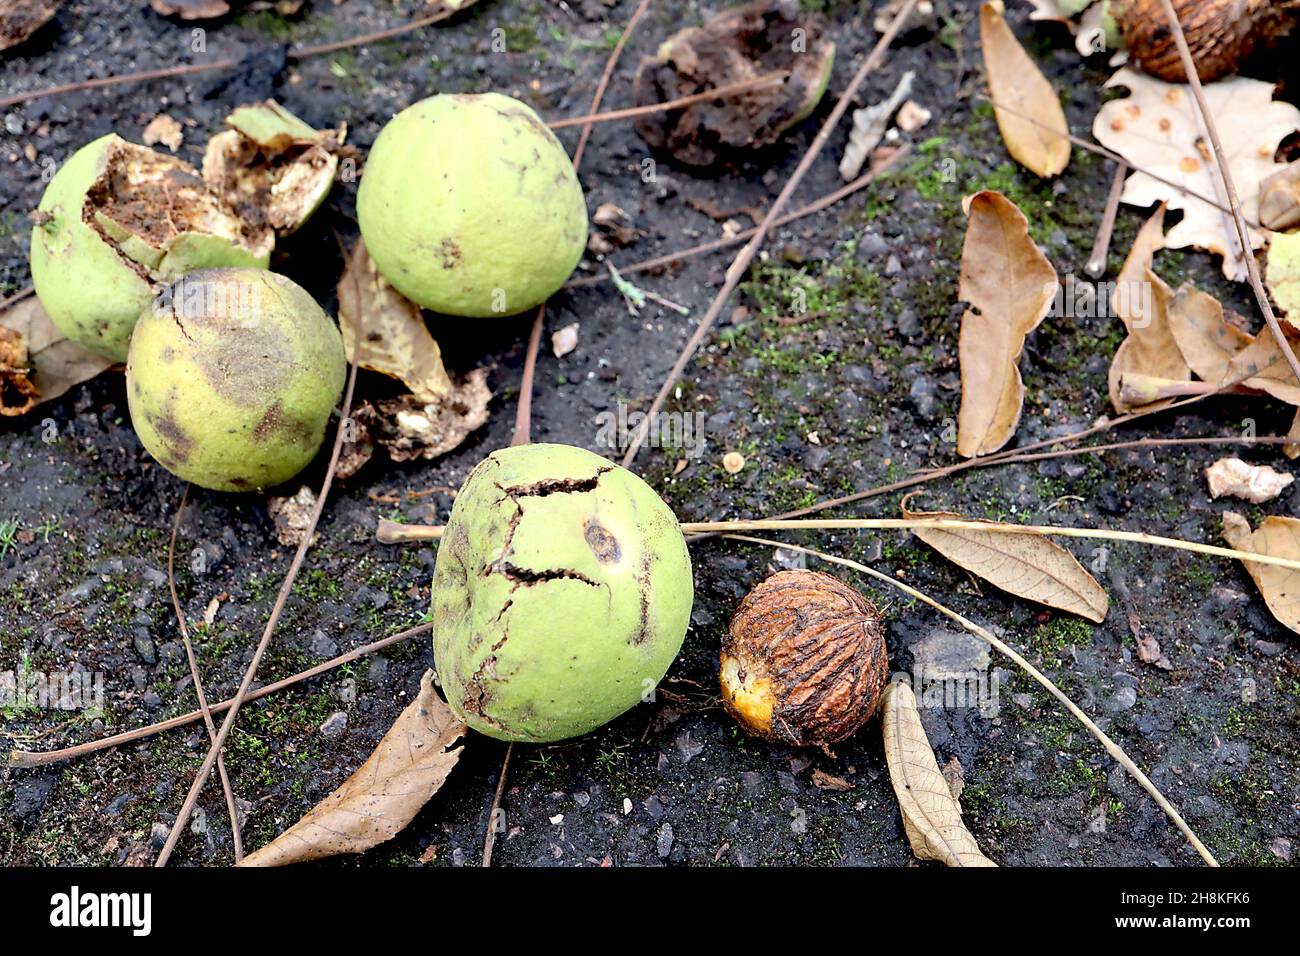 Juglans nigra black walnut tree – large round light green fruit casing and spherical corrugated brown fruit,  November, England, UK Stock Photo